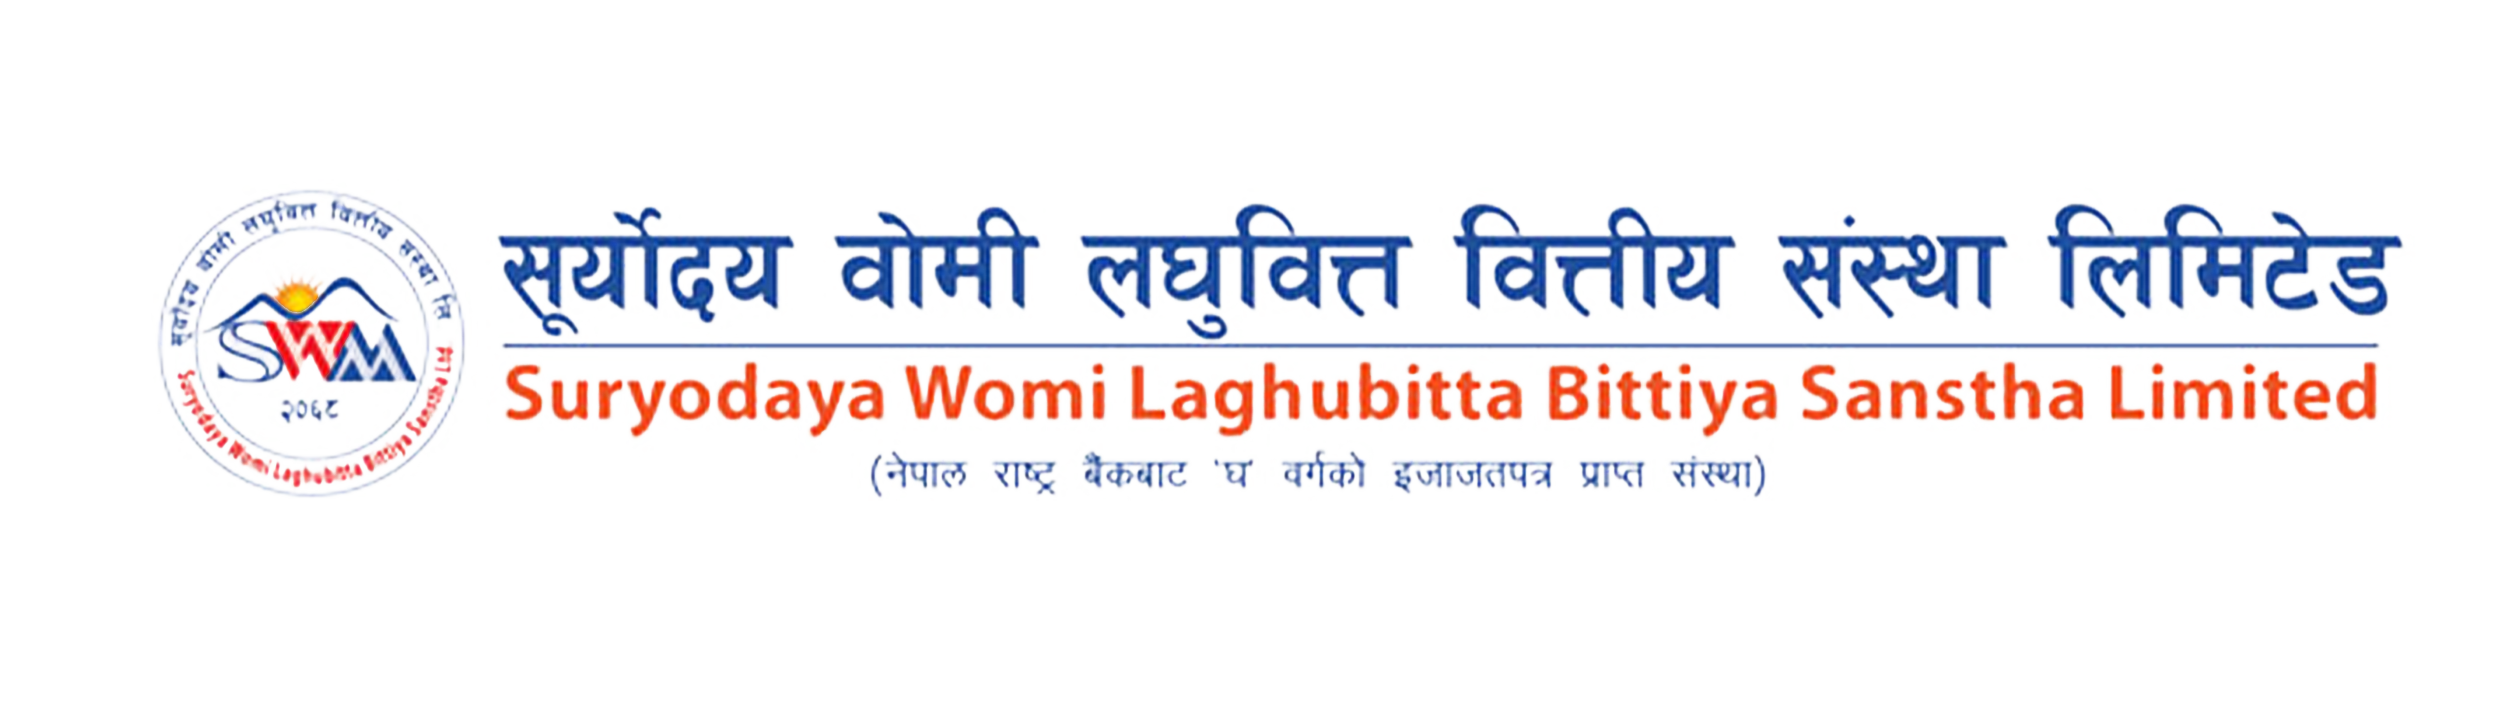 Lekhnath Khania named as Chair of Board of Directors of Suryodaya Womi Laghubitta